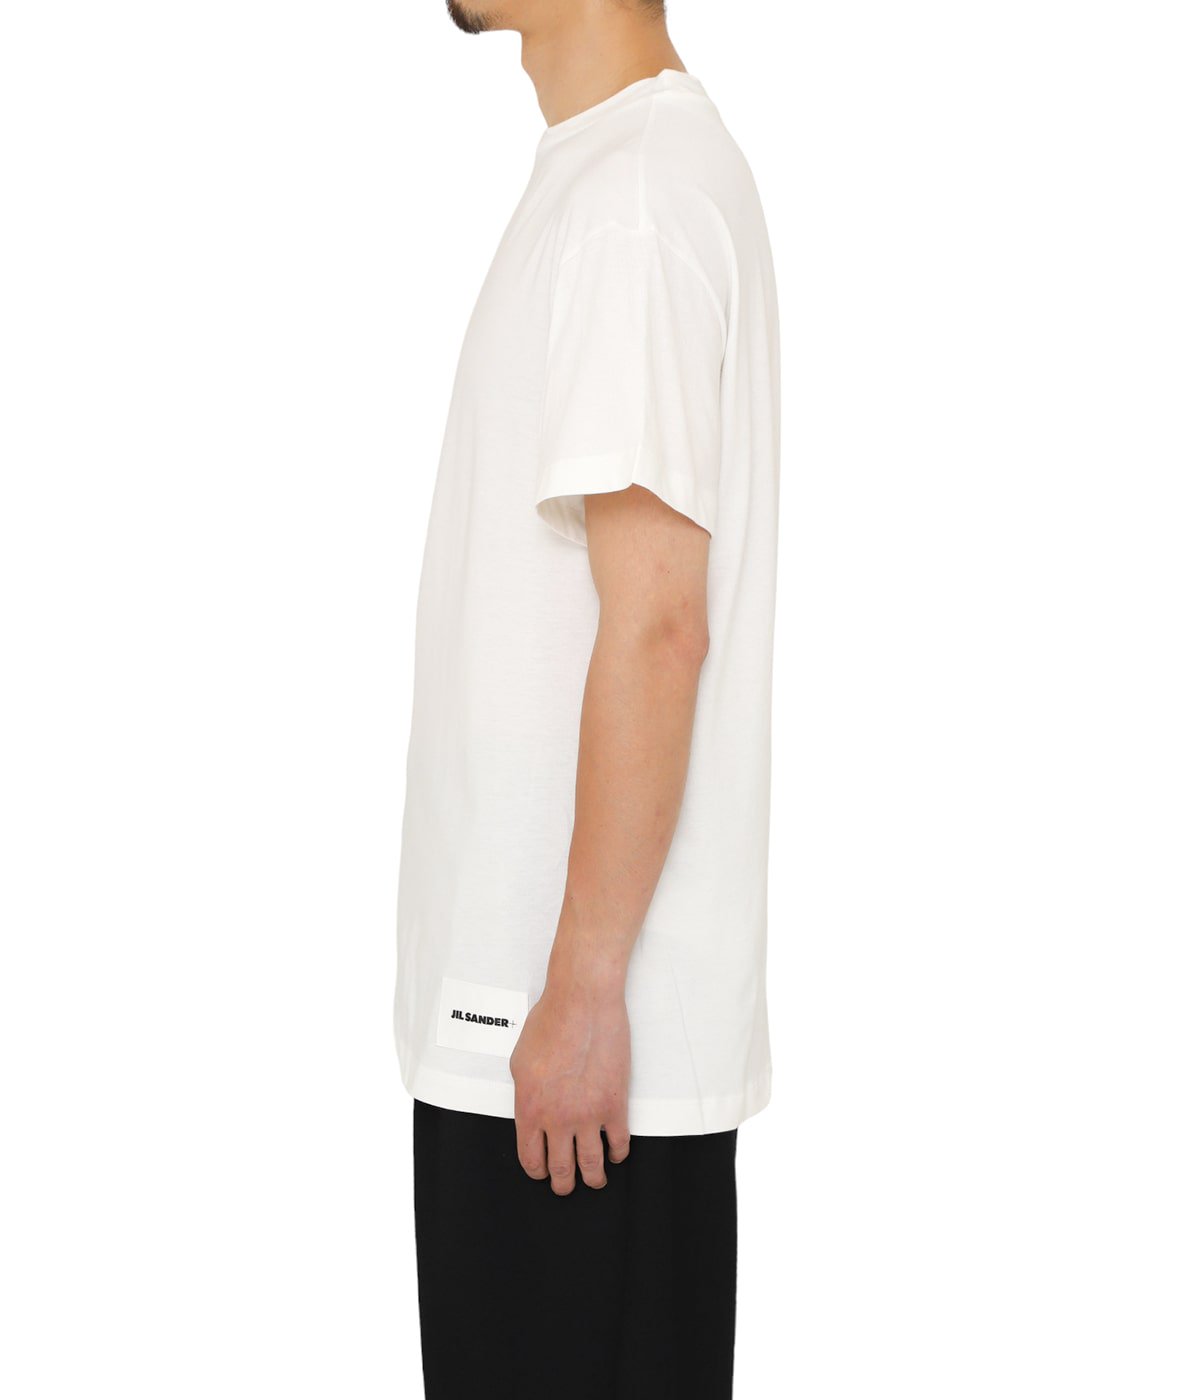 Jil Sander+ 3-Pack Tee ジルサンダー パック Tシャツ73cm身幅